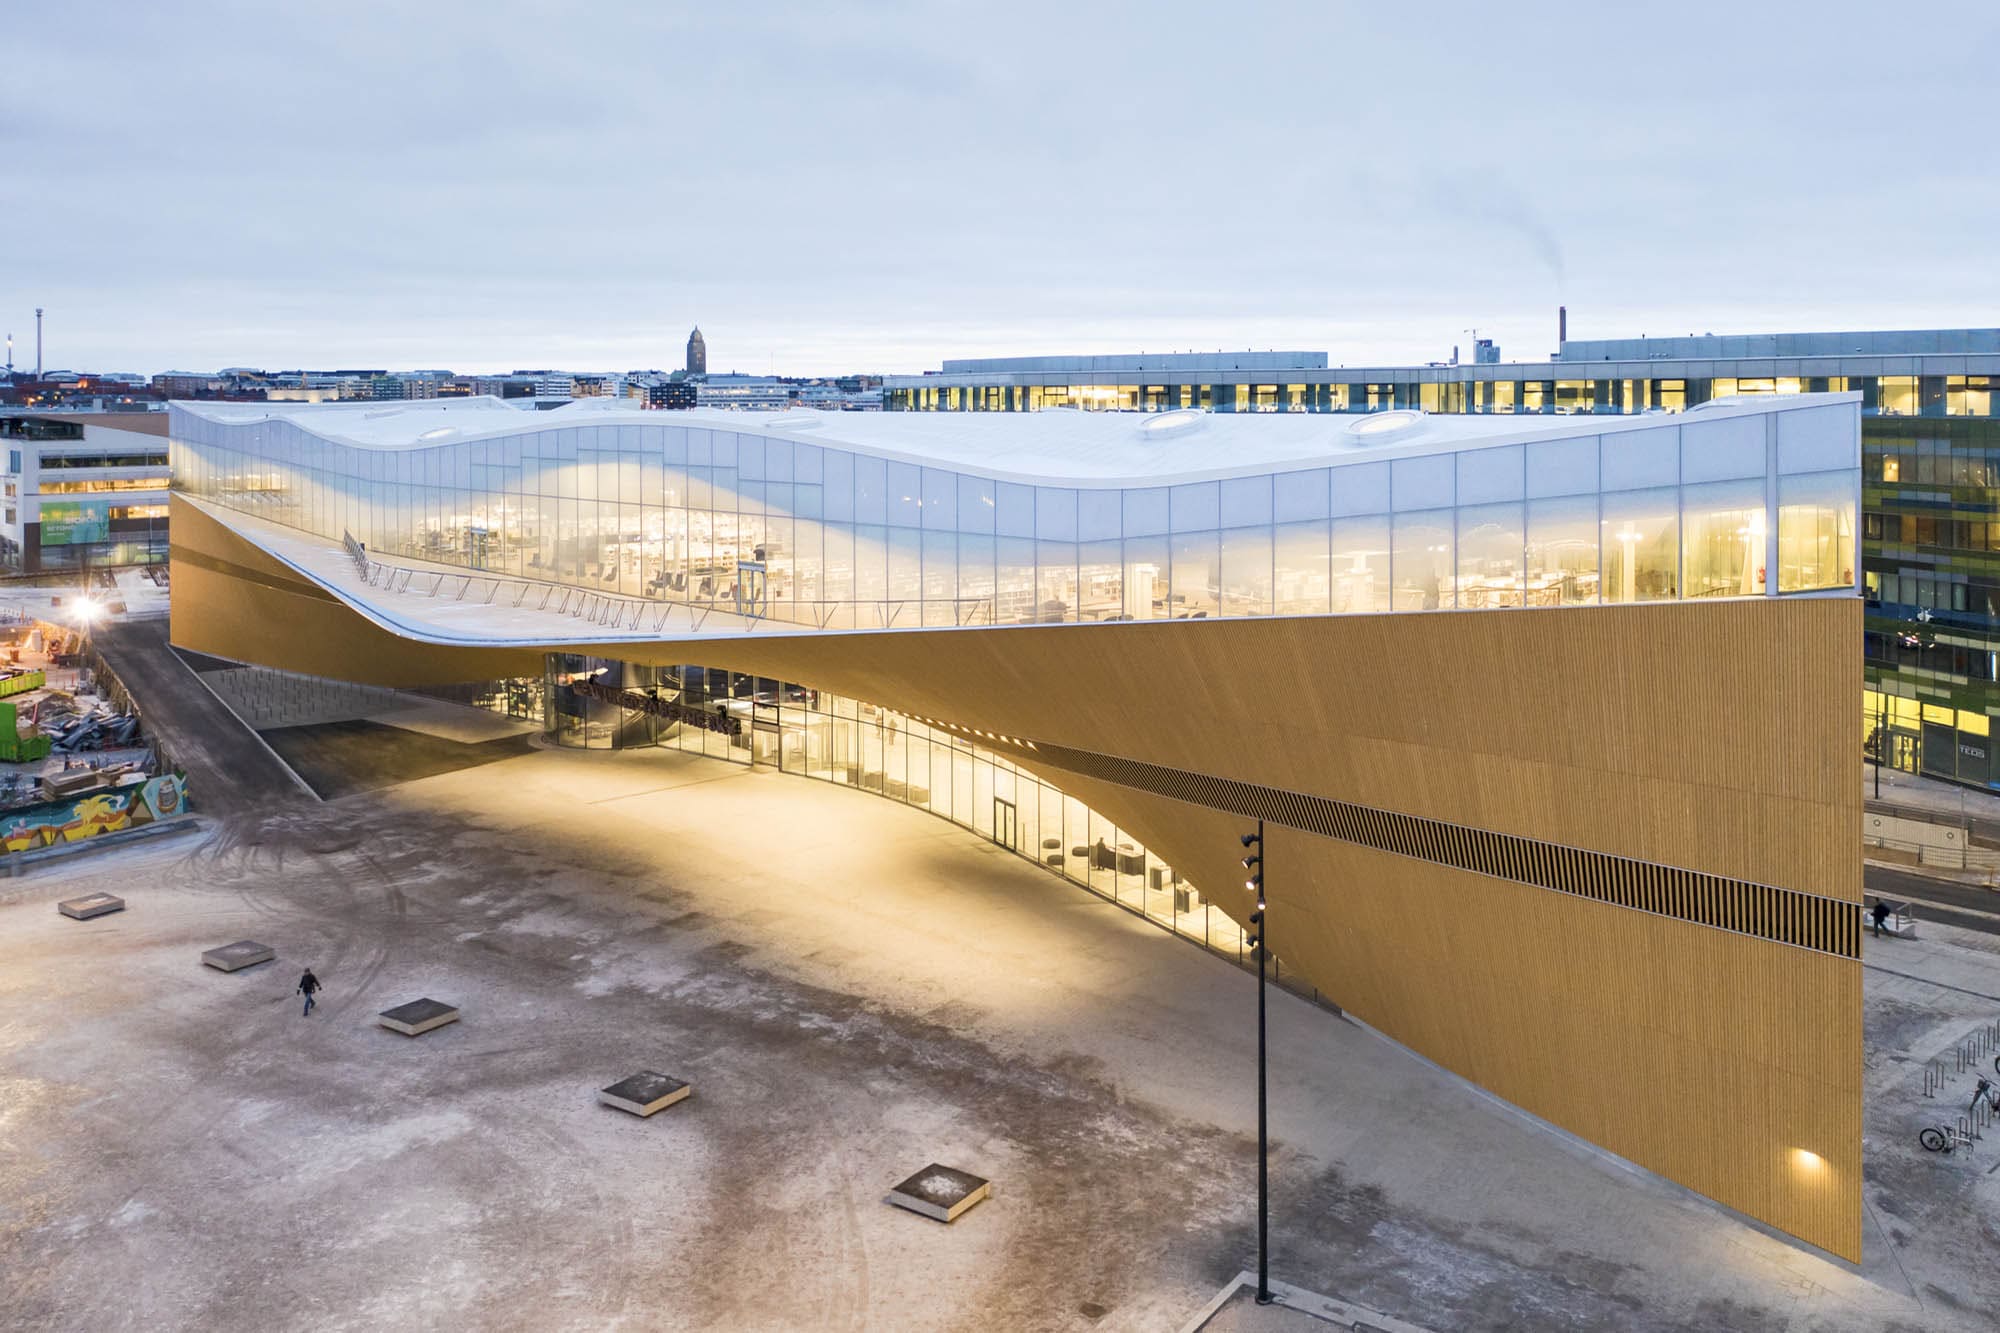 Oodi – Helsinki Central Library